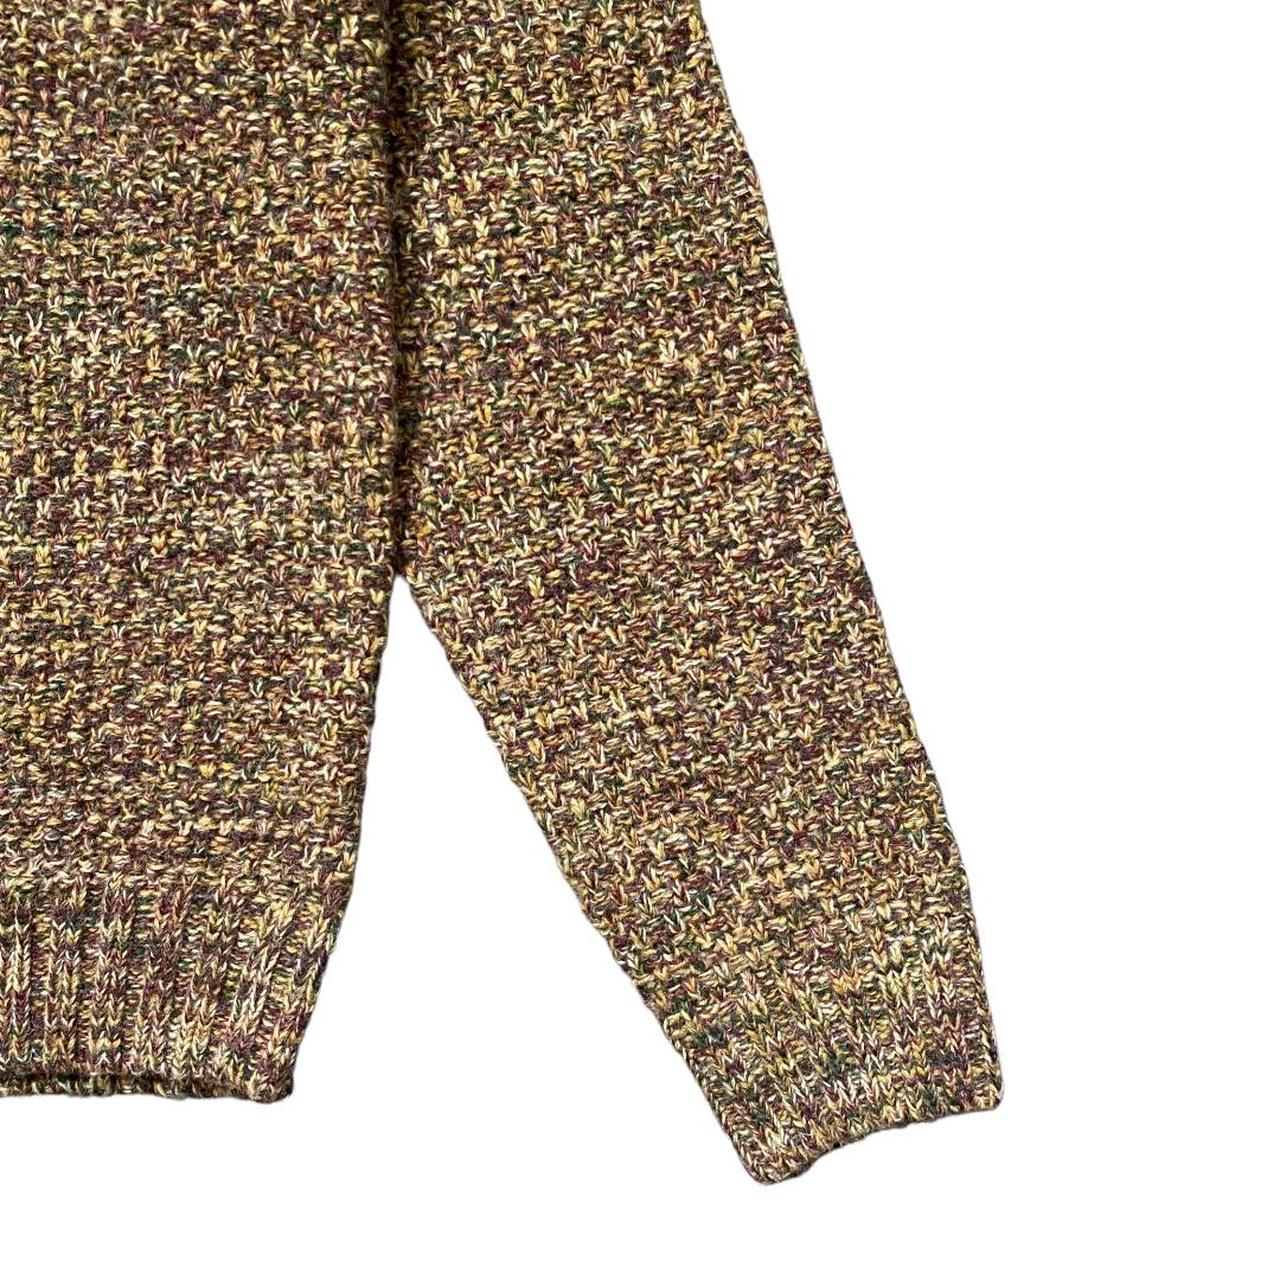 2021 Folk Mixed Yard Knit Jumper. Lovely blend of... - Depop